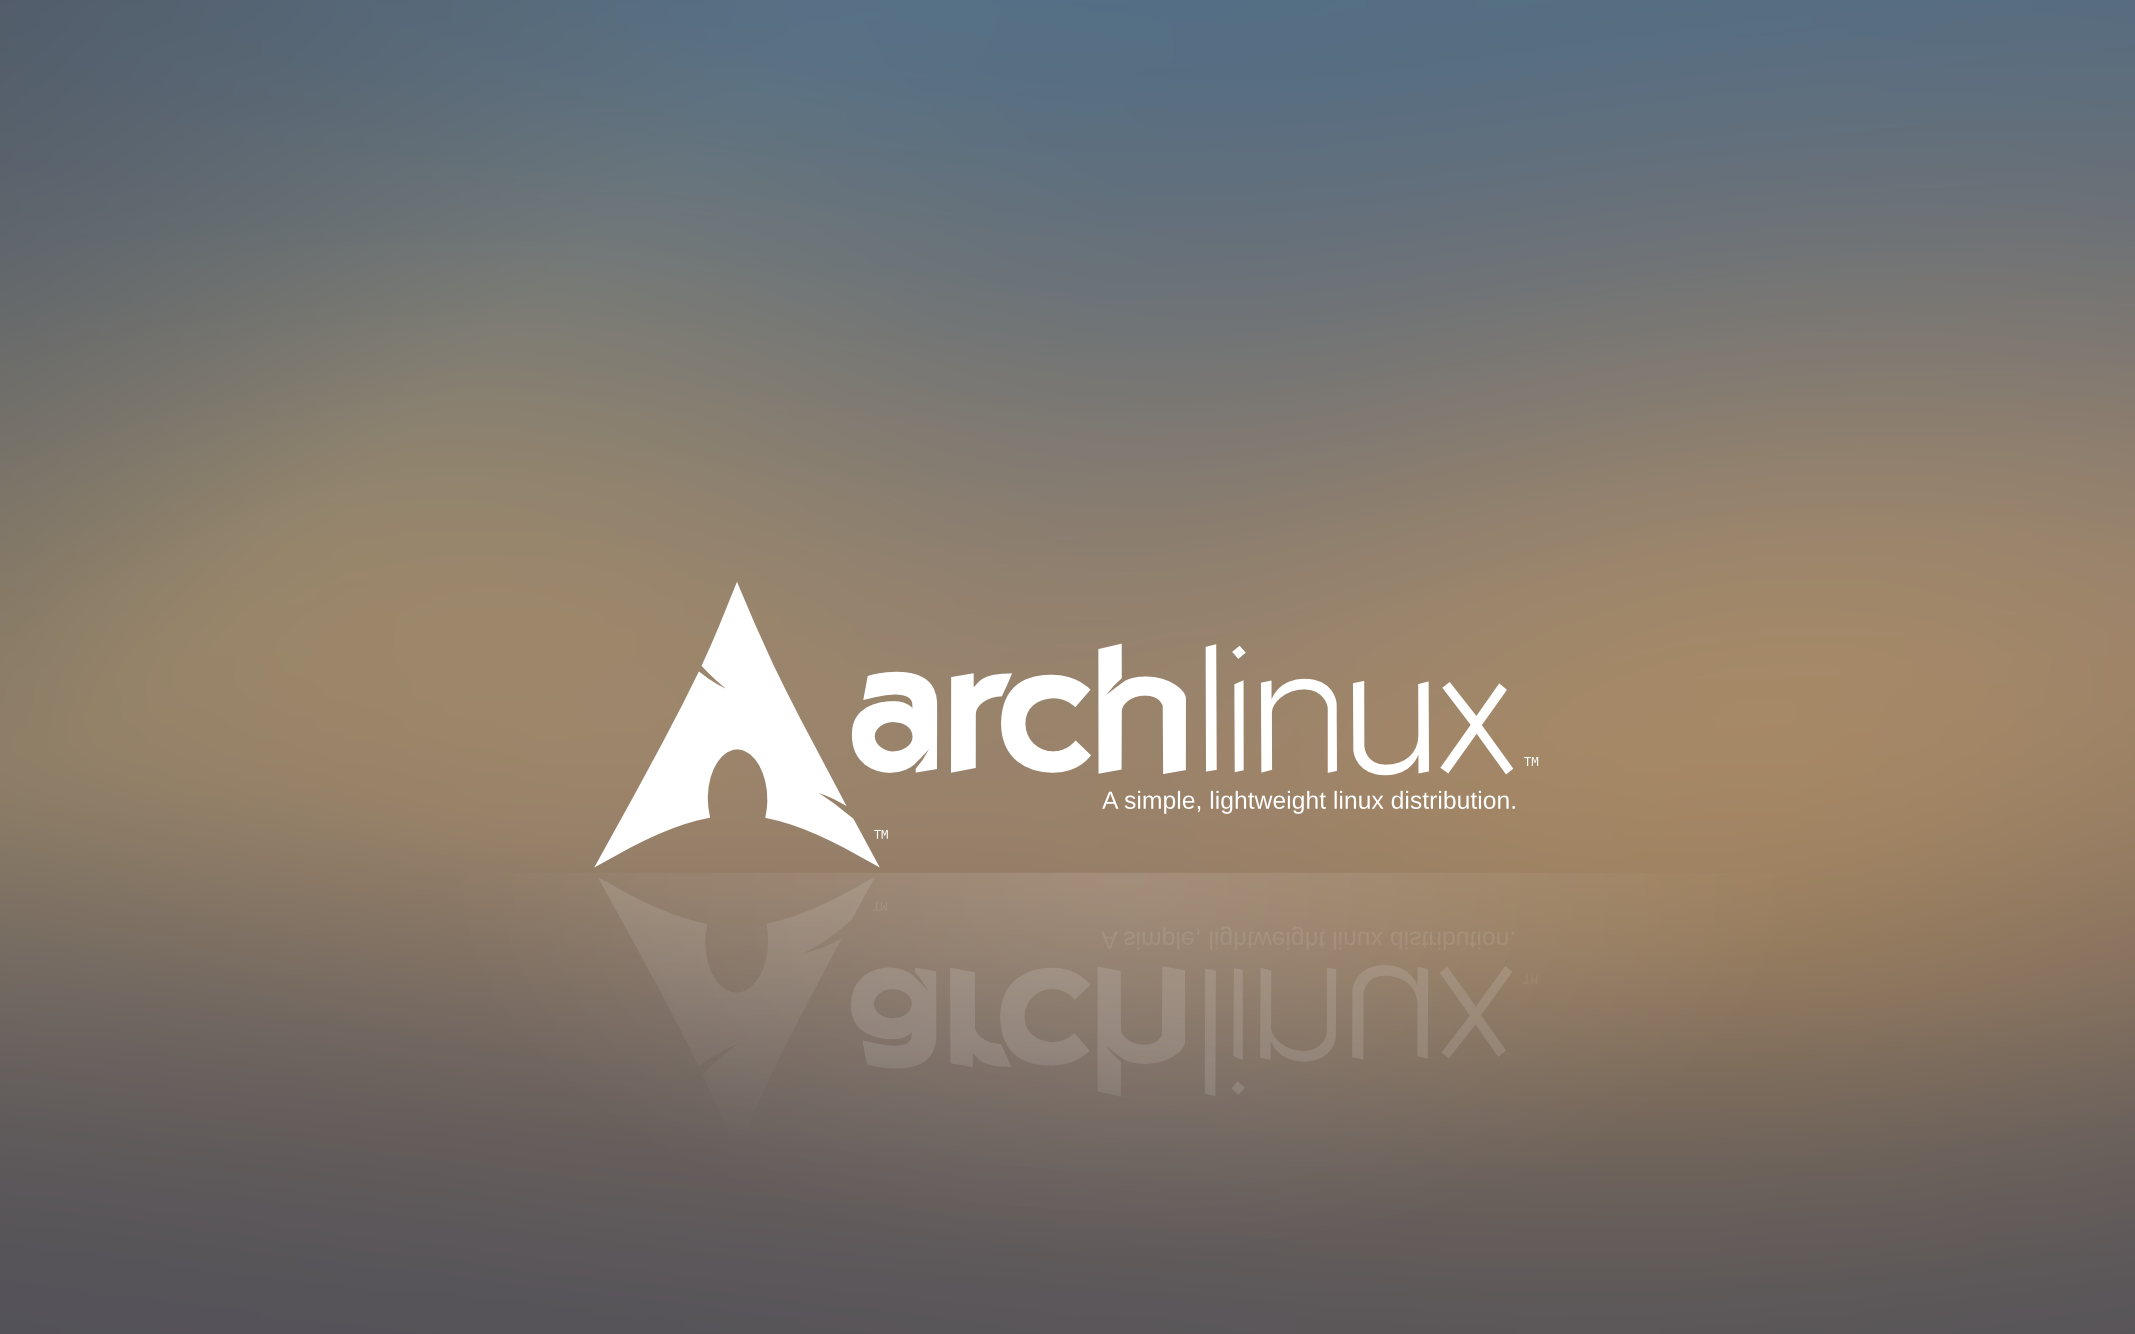 arch linux wallpaper hd,logo,font,sky,brand,triangle